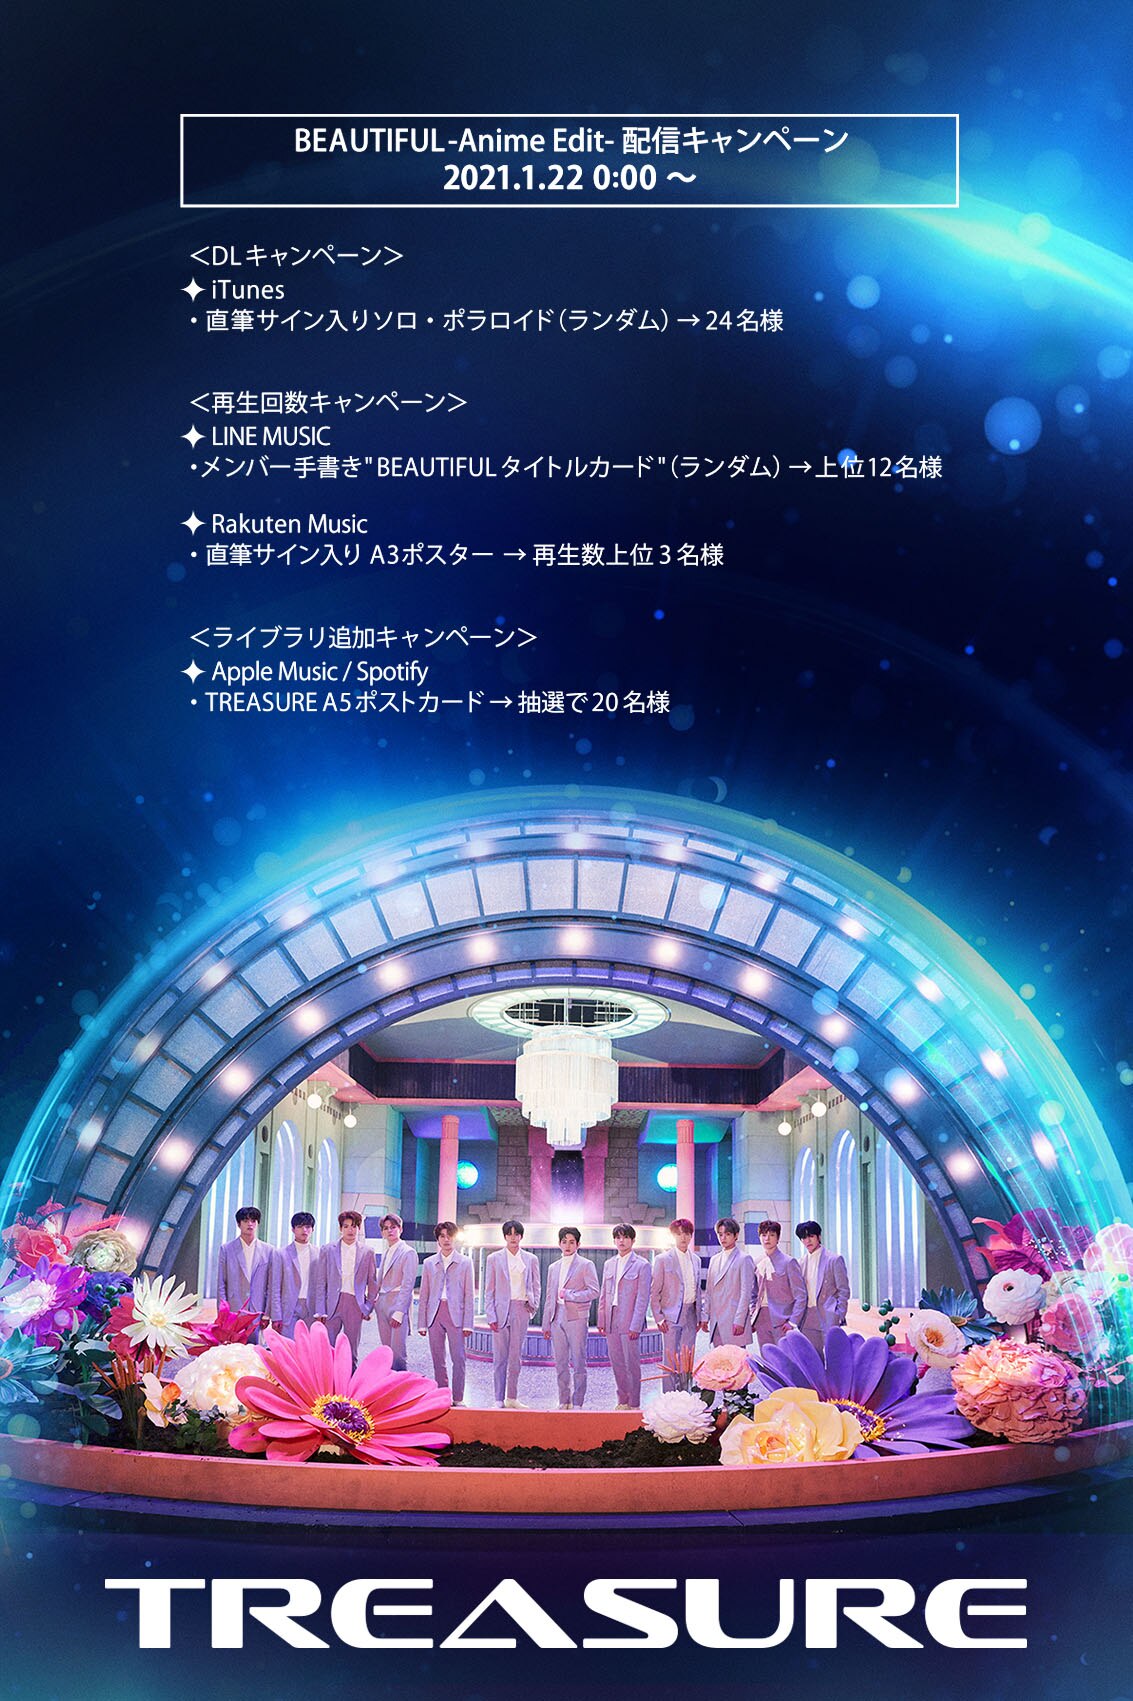 Takarajima Treasure island DVDBOX 1 2 TV version complete set Anime 